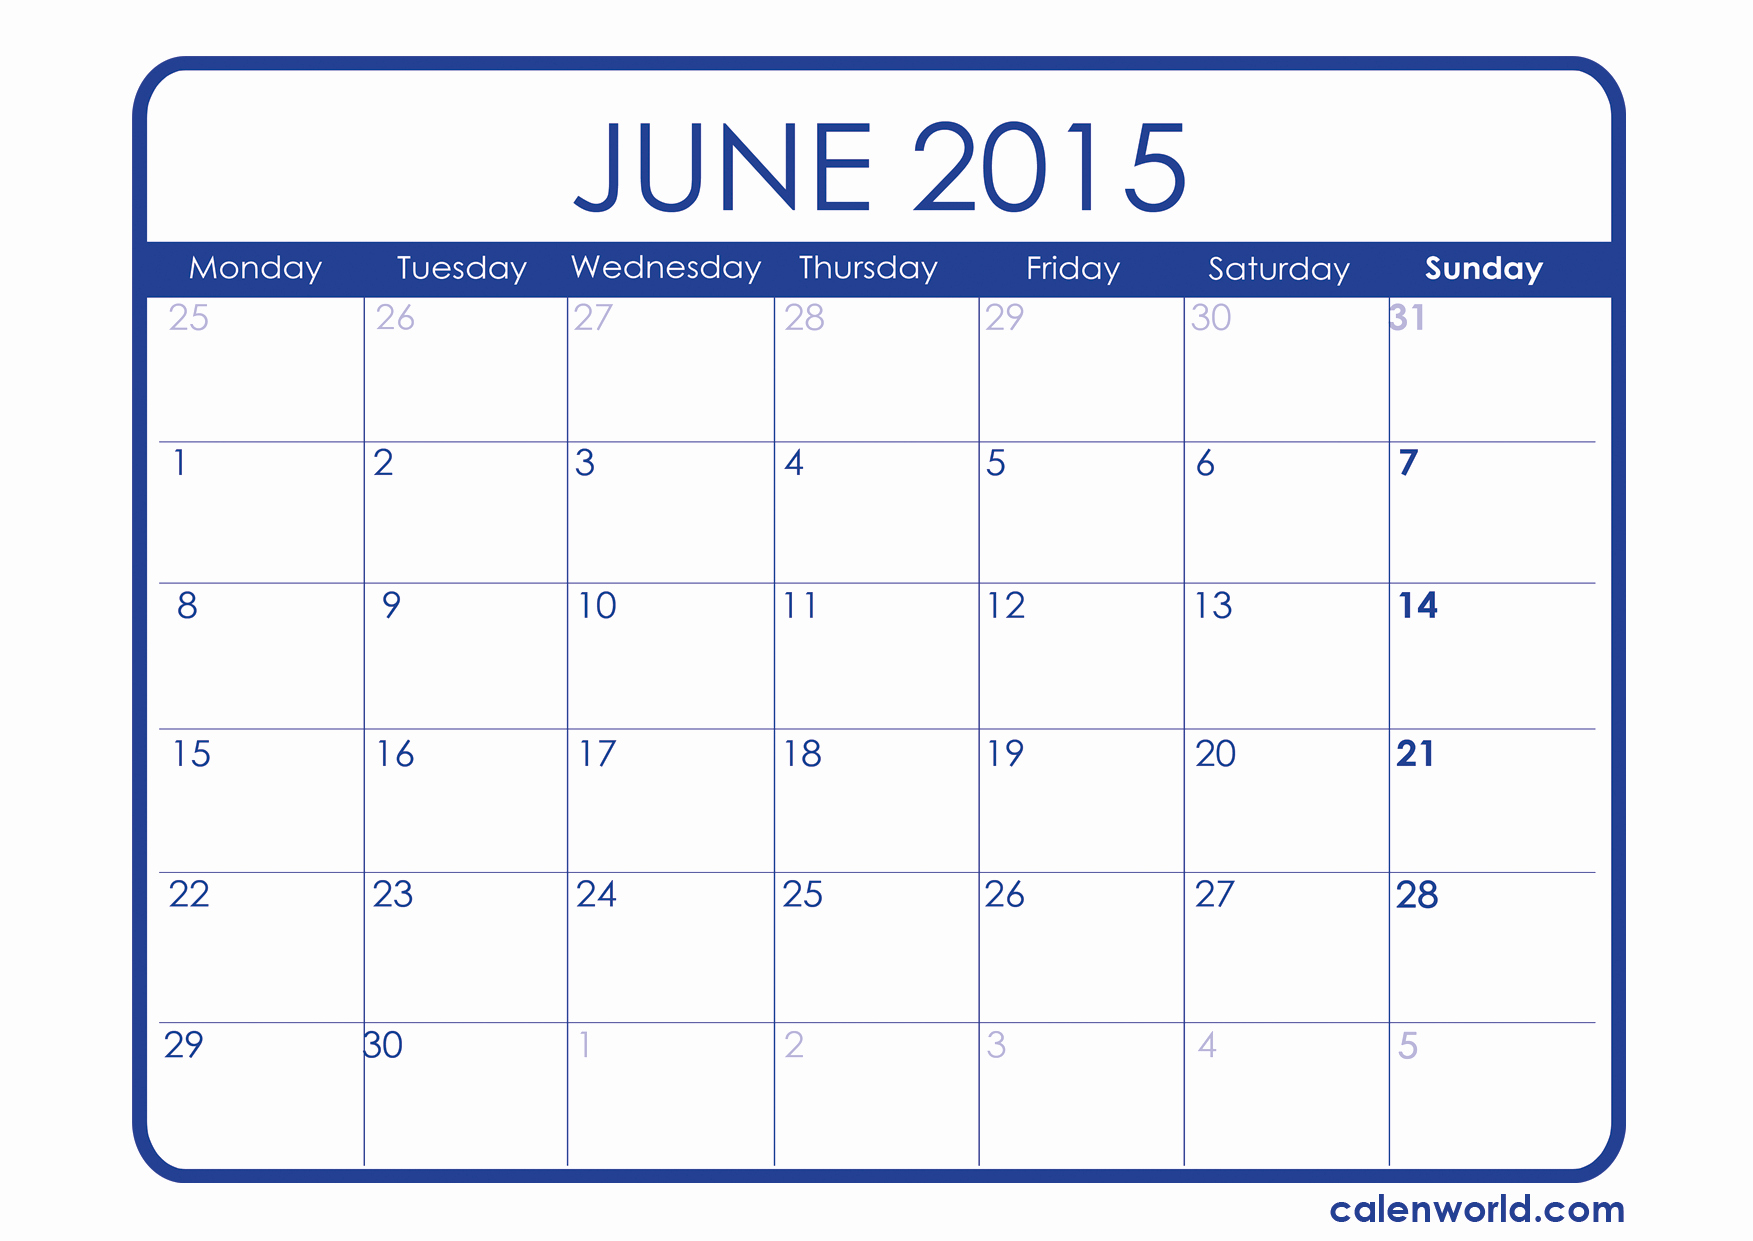 Calendar Template for June 2015 Awesome June 2015 Calendar